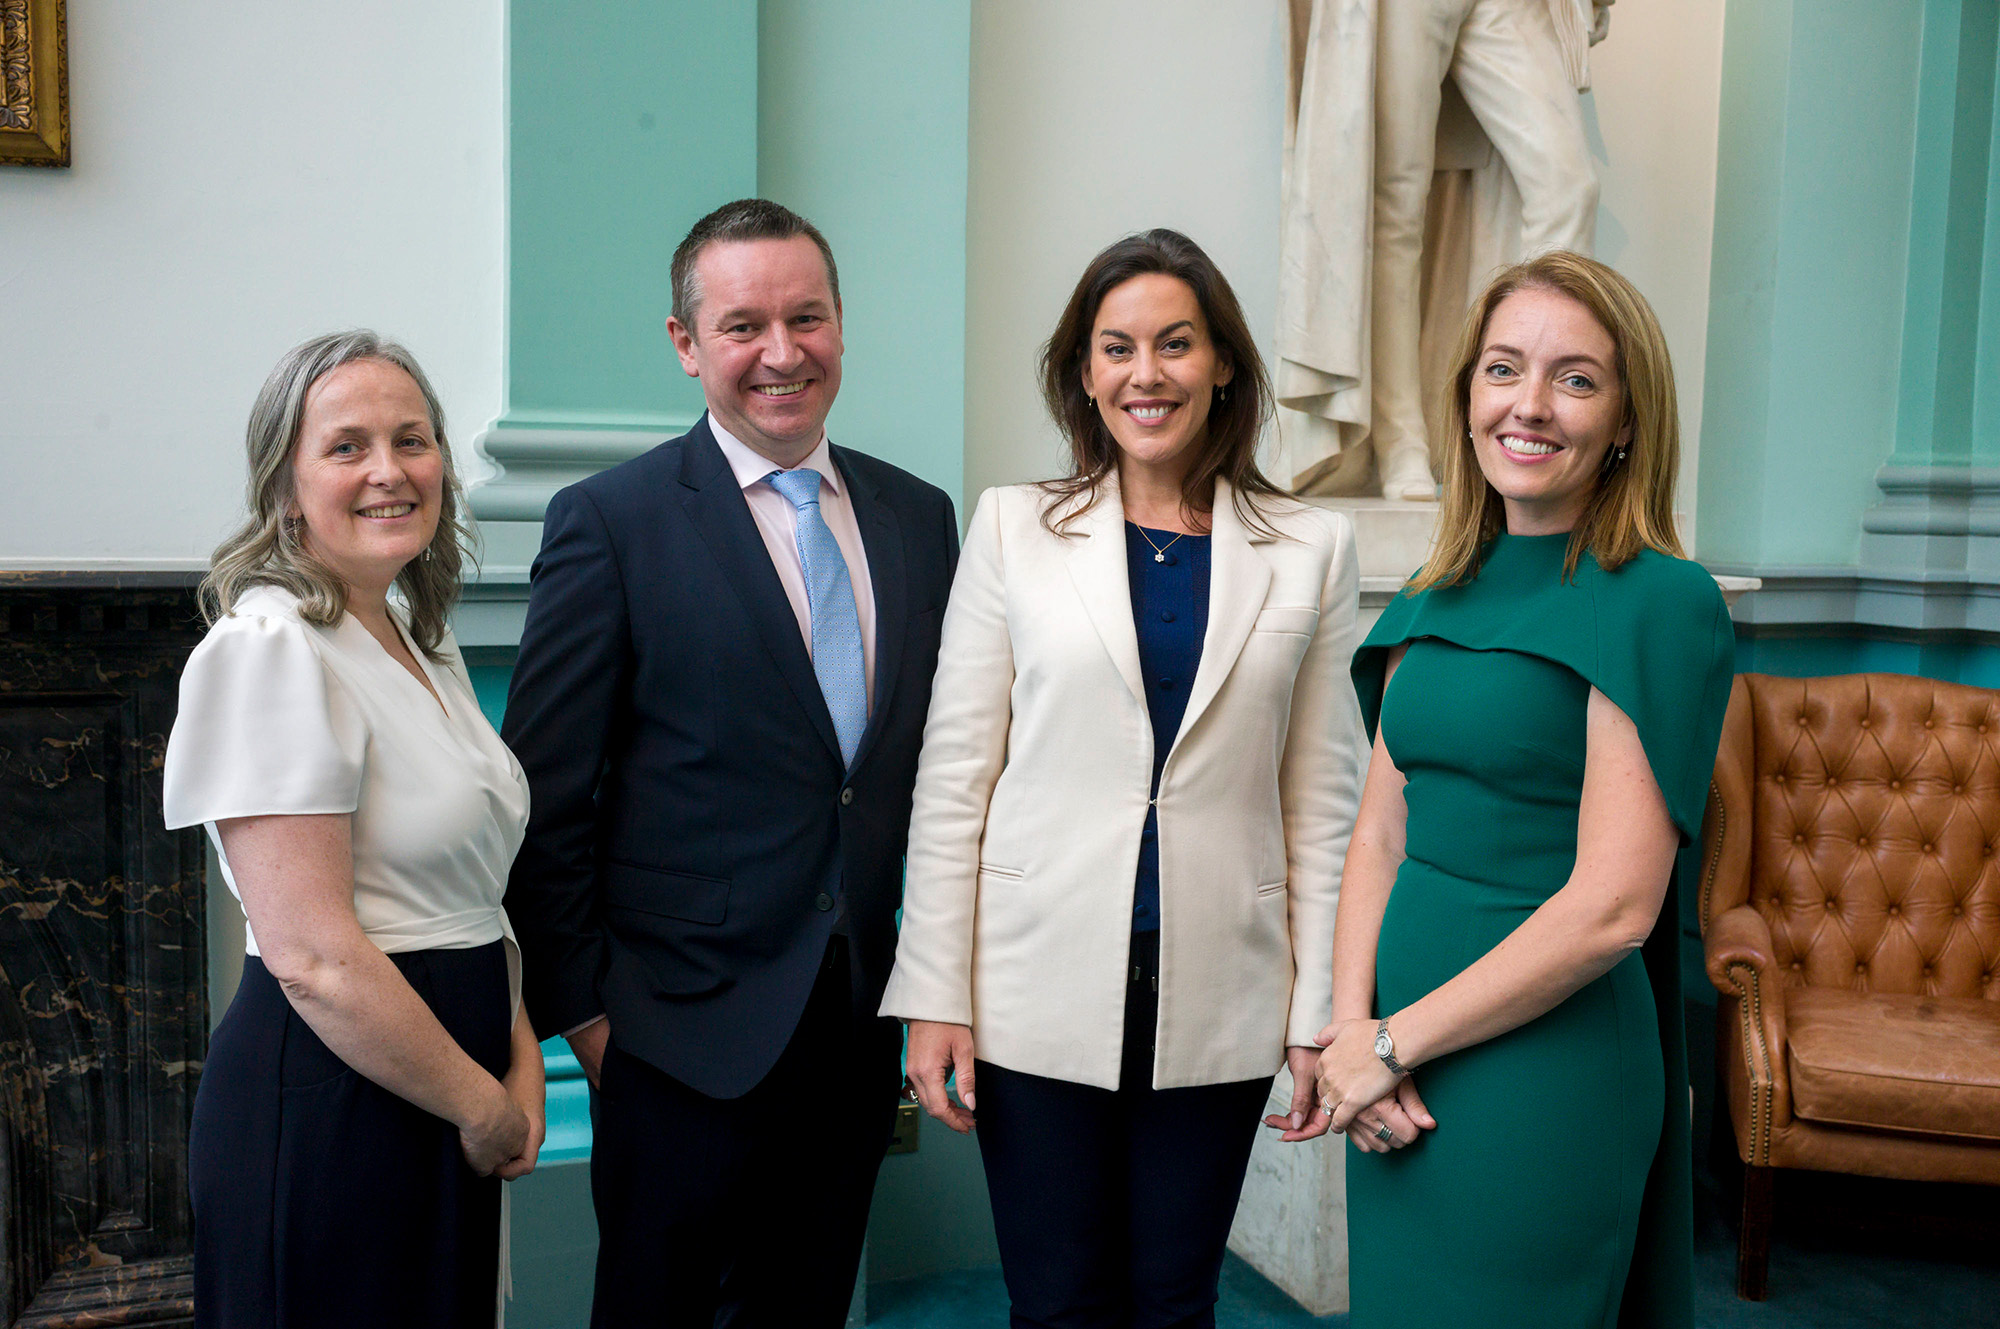 K&L Gates inaugurates new Dublin office